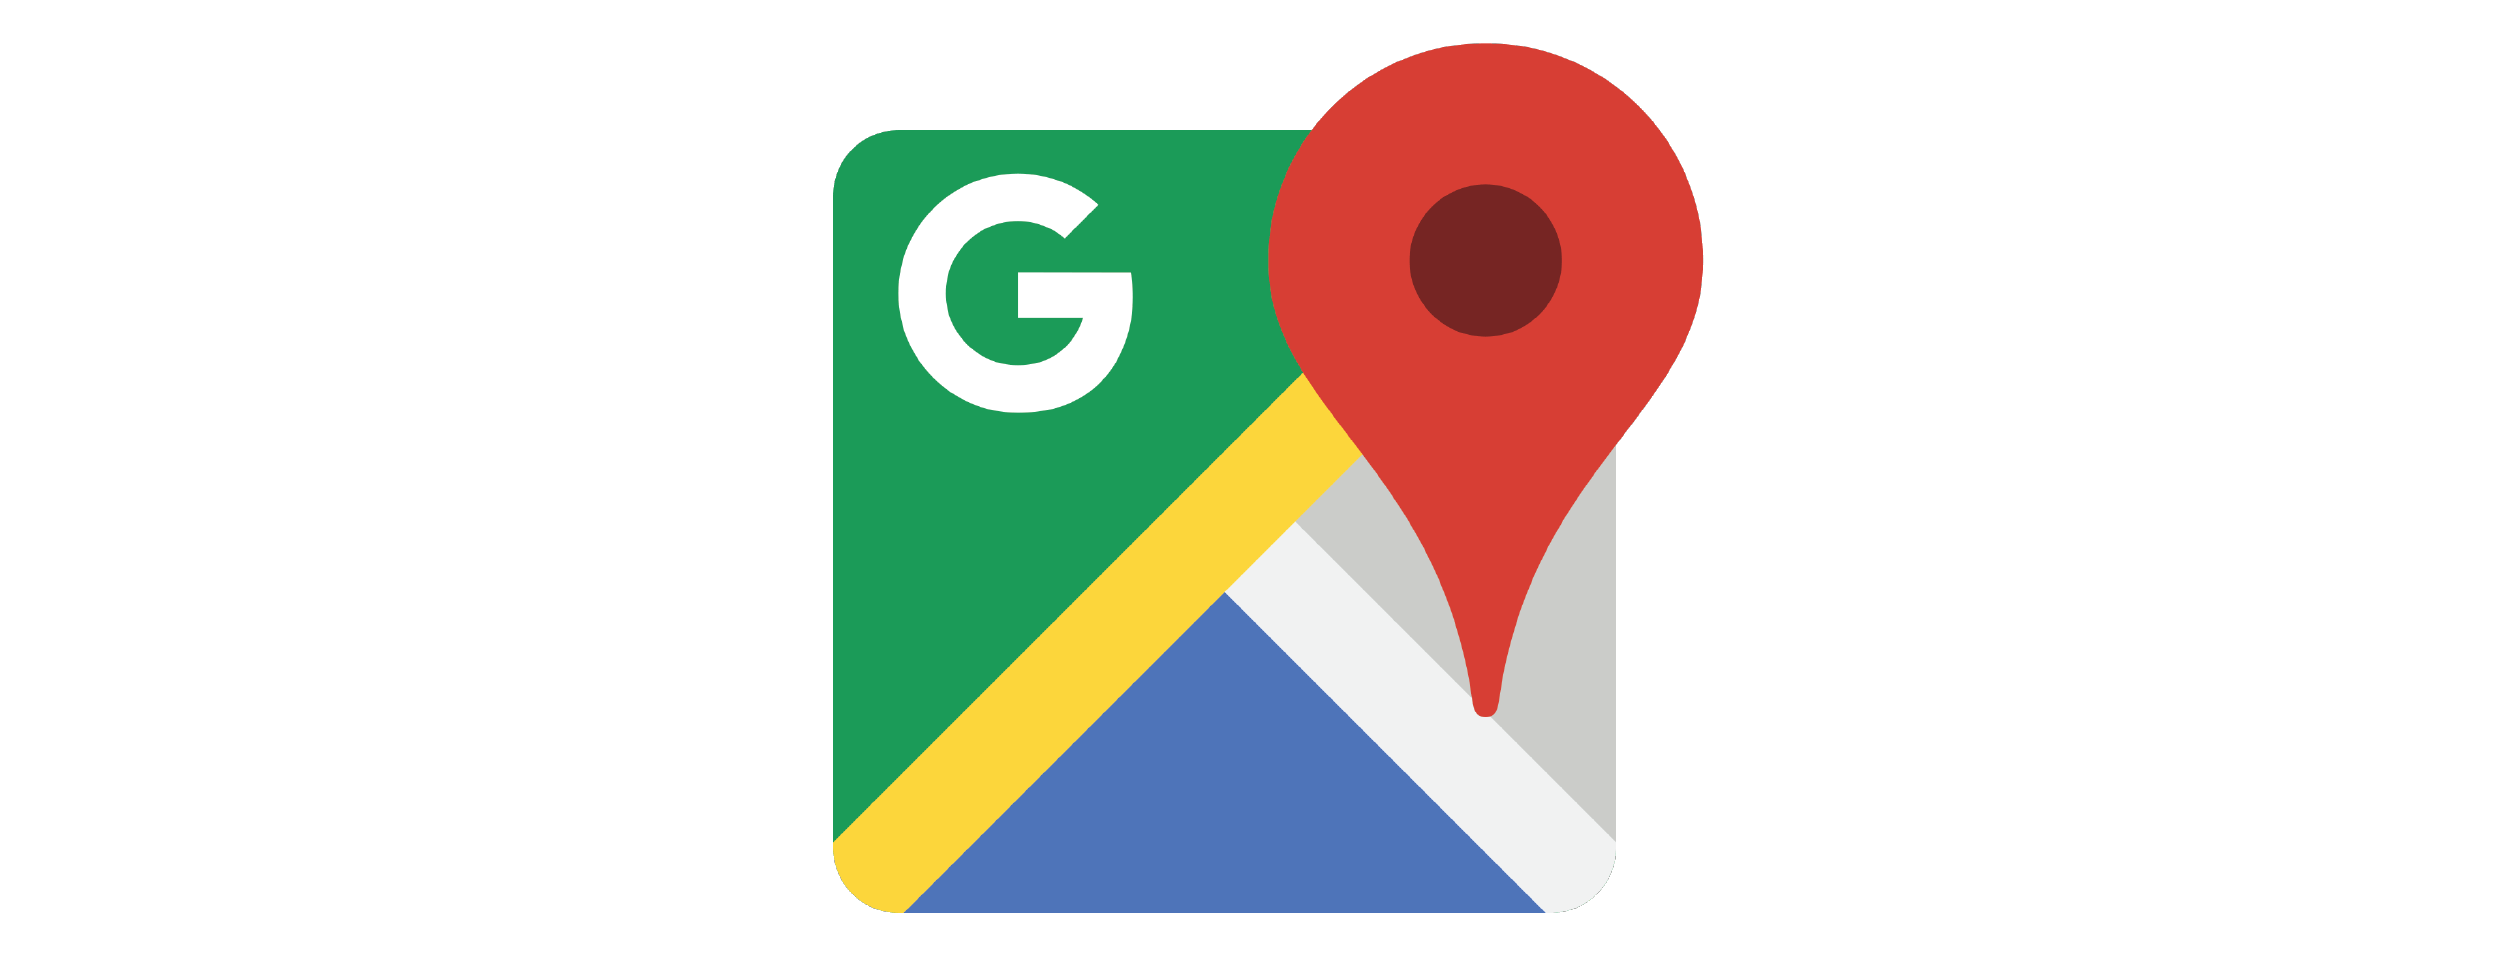 Google Maps Logo - Google Maps logo-01 - Netpremacy